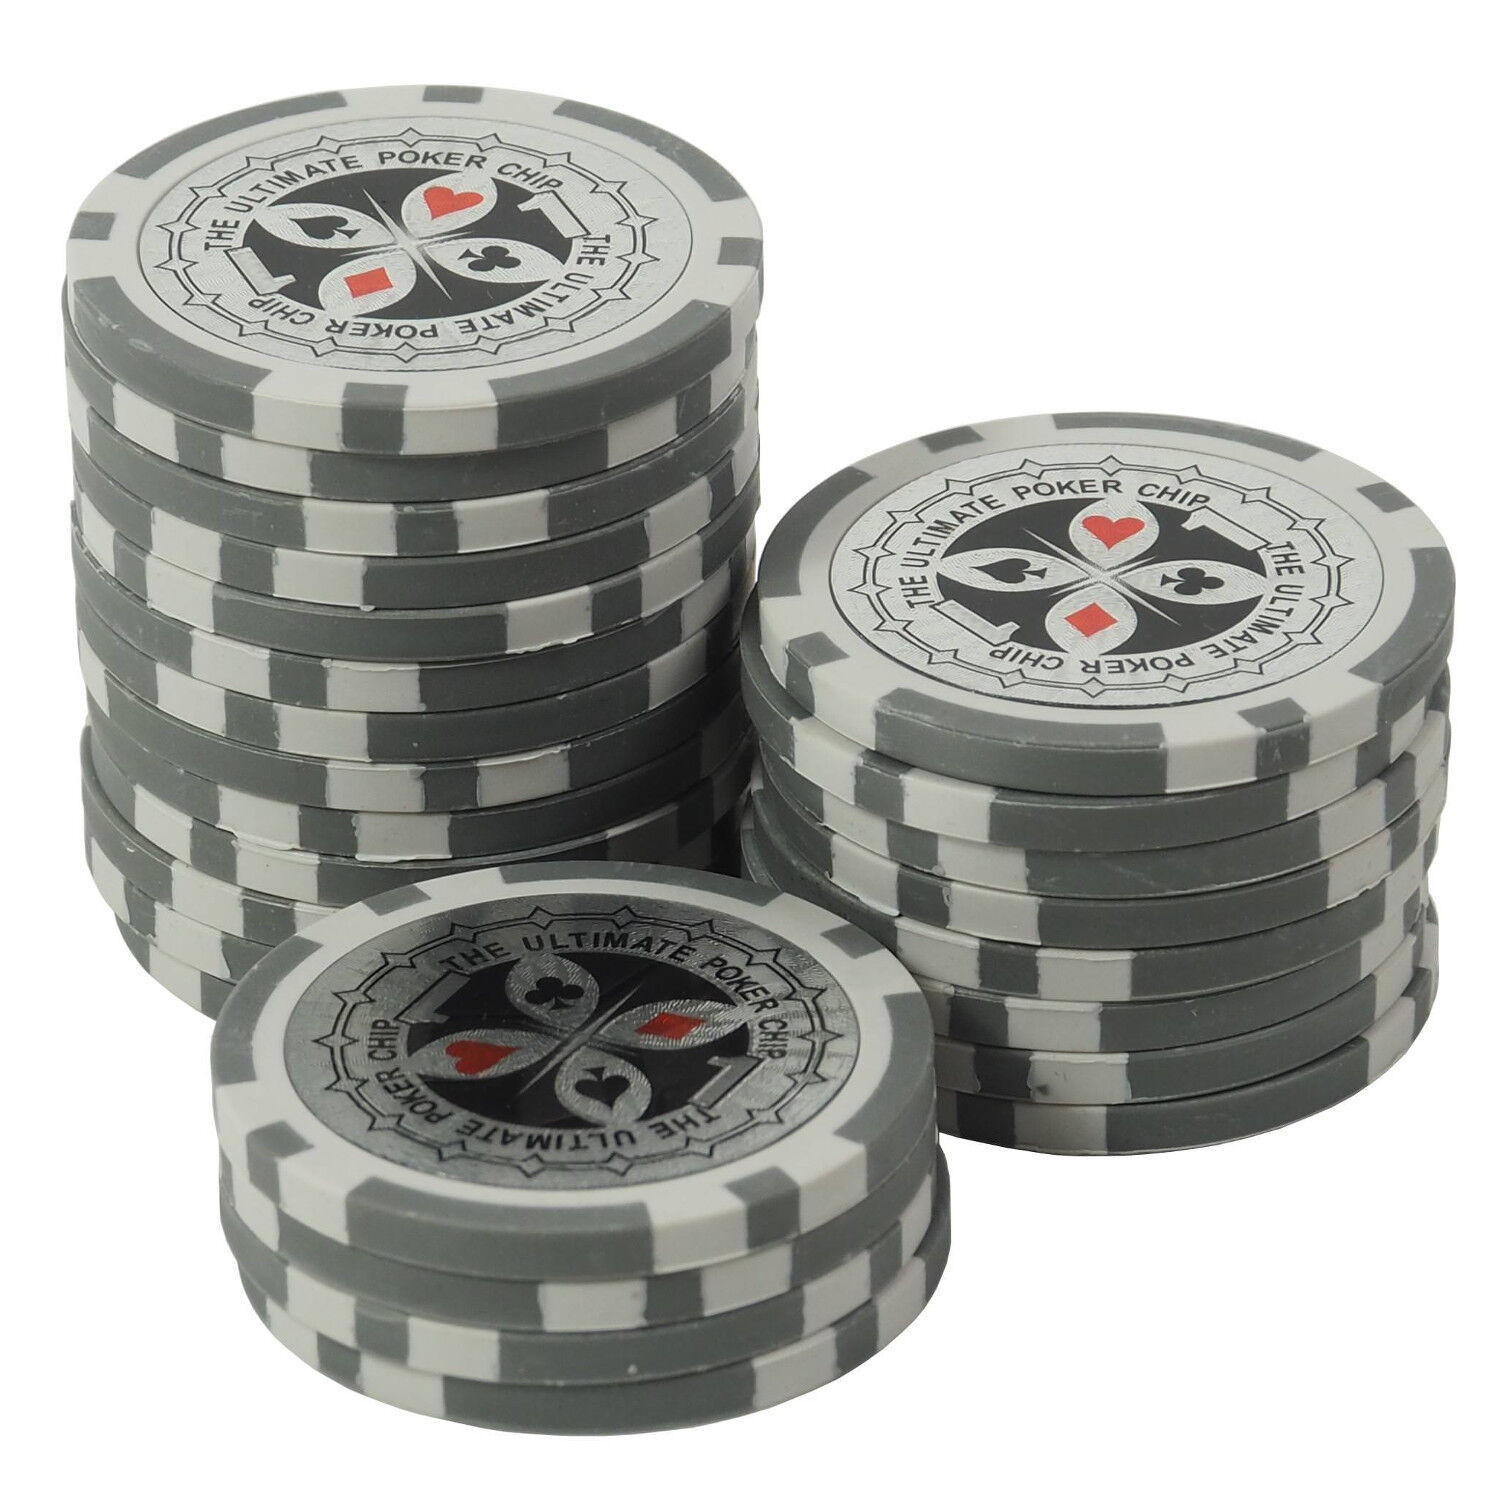 Pokerchips 13g Clay Laser Metallkern Casino Ultimate 1 bis 50000 f Pokerkoffer